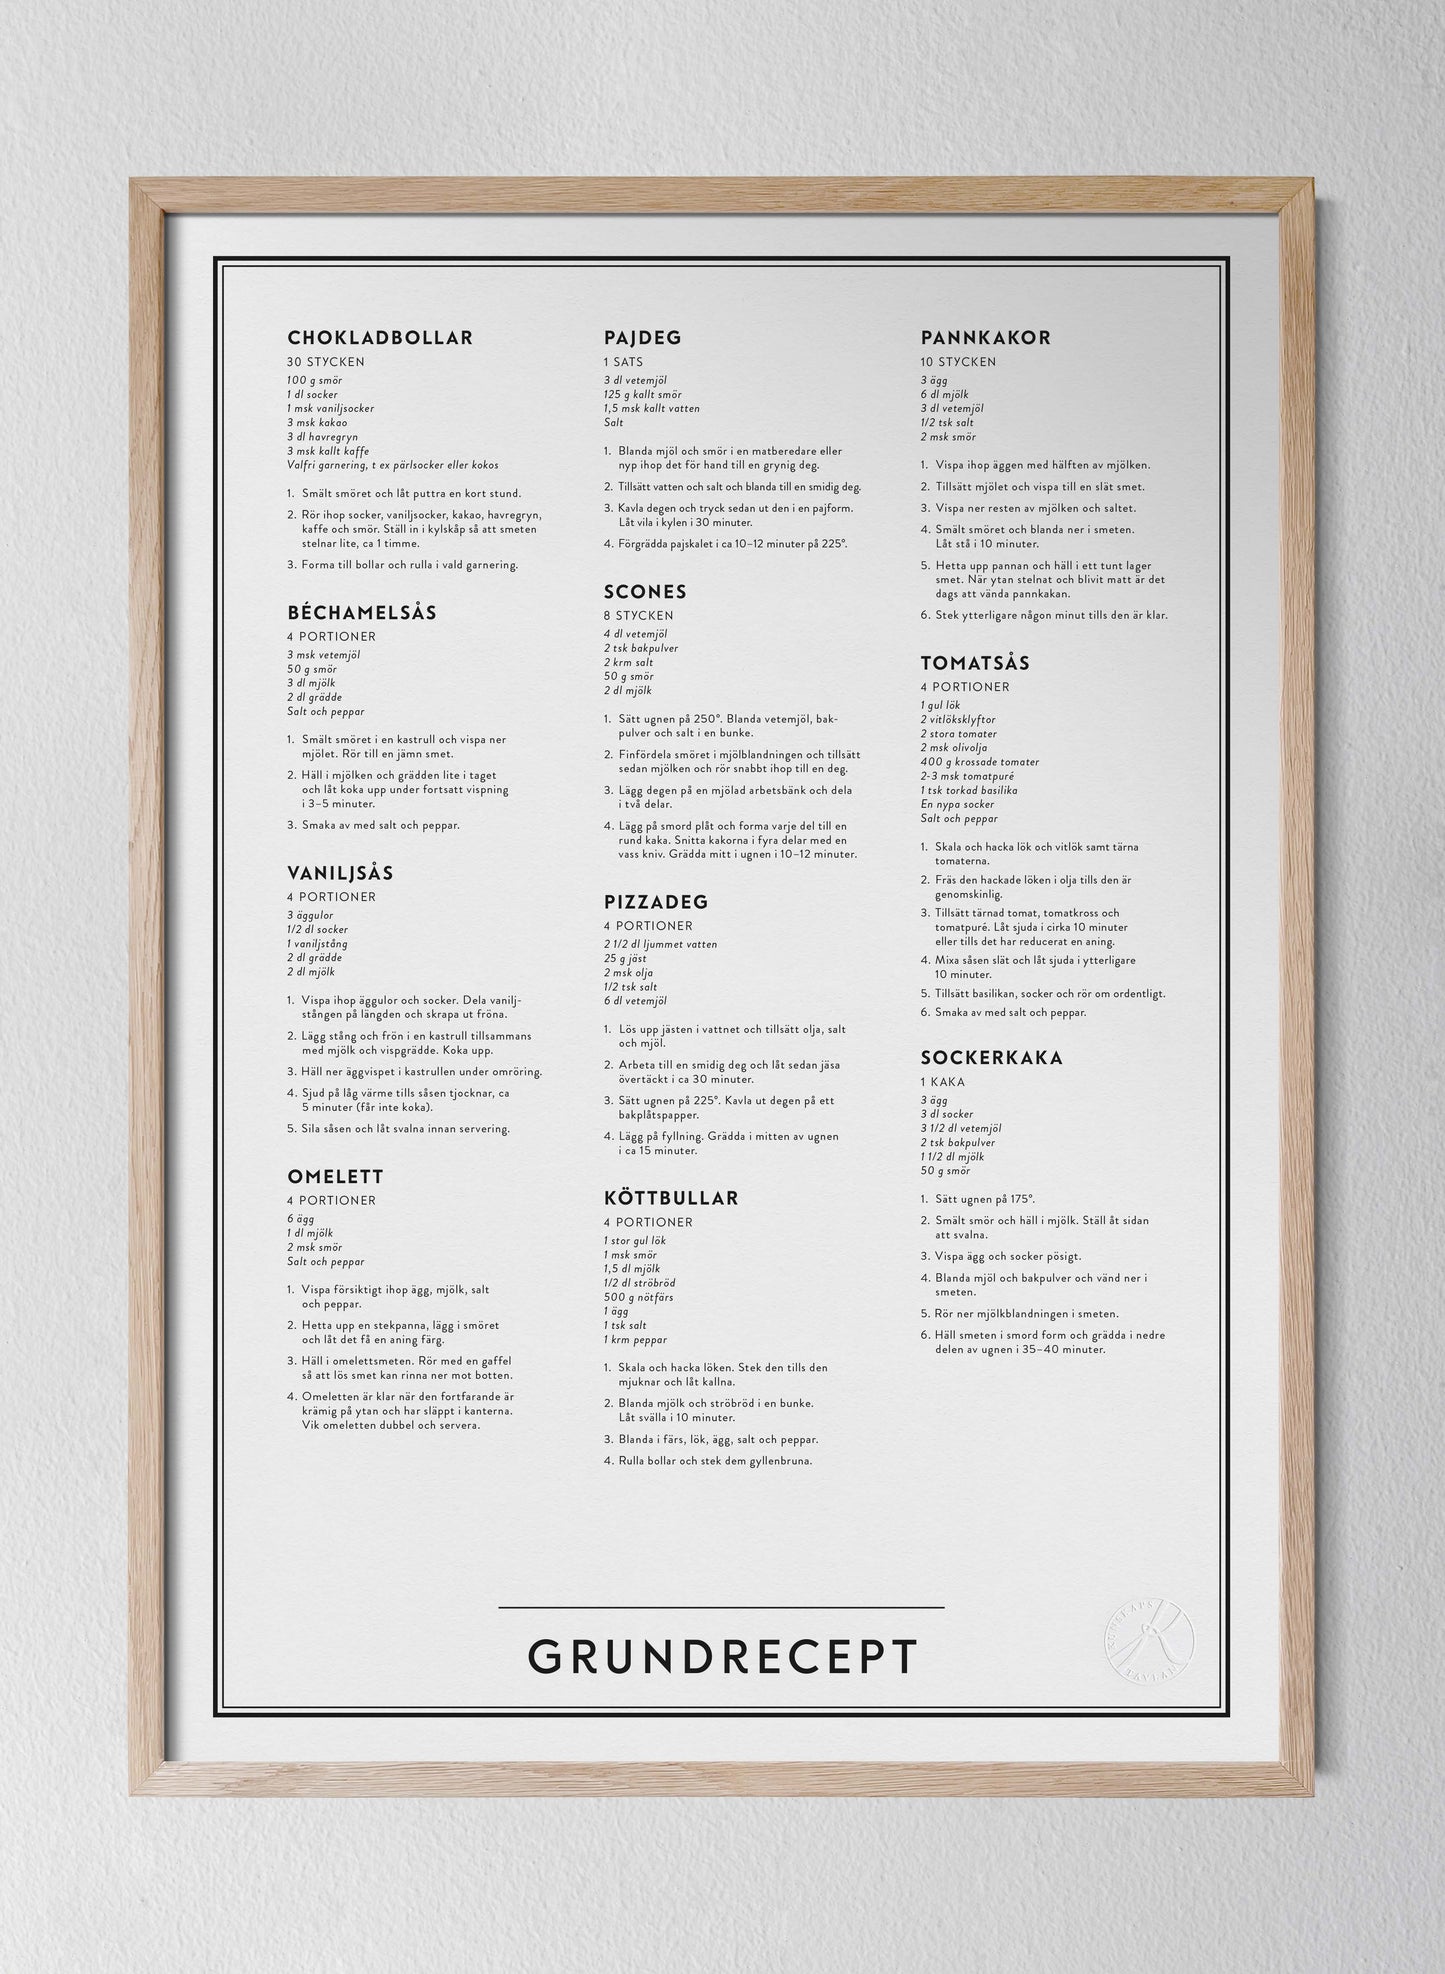 Grundrecept - Basic Recipes in Swedish